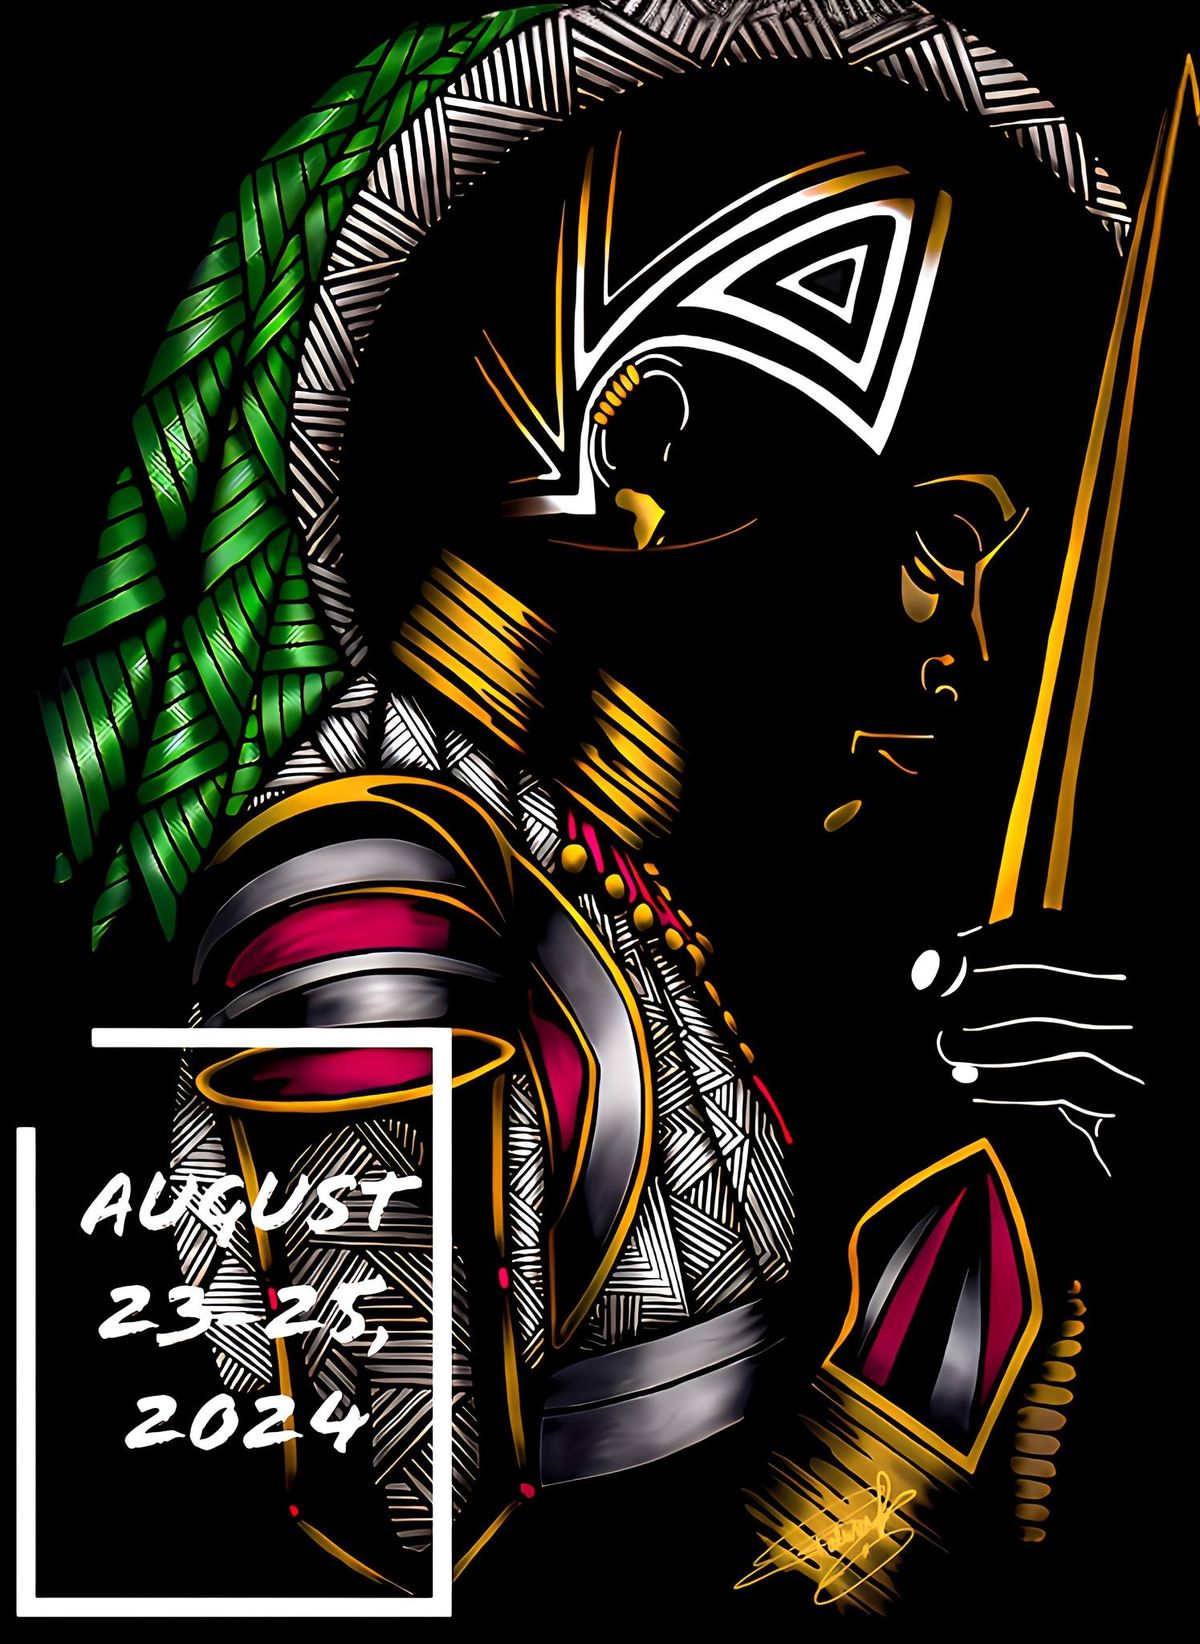 Festival Sundiata Black Arts Fest